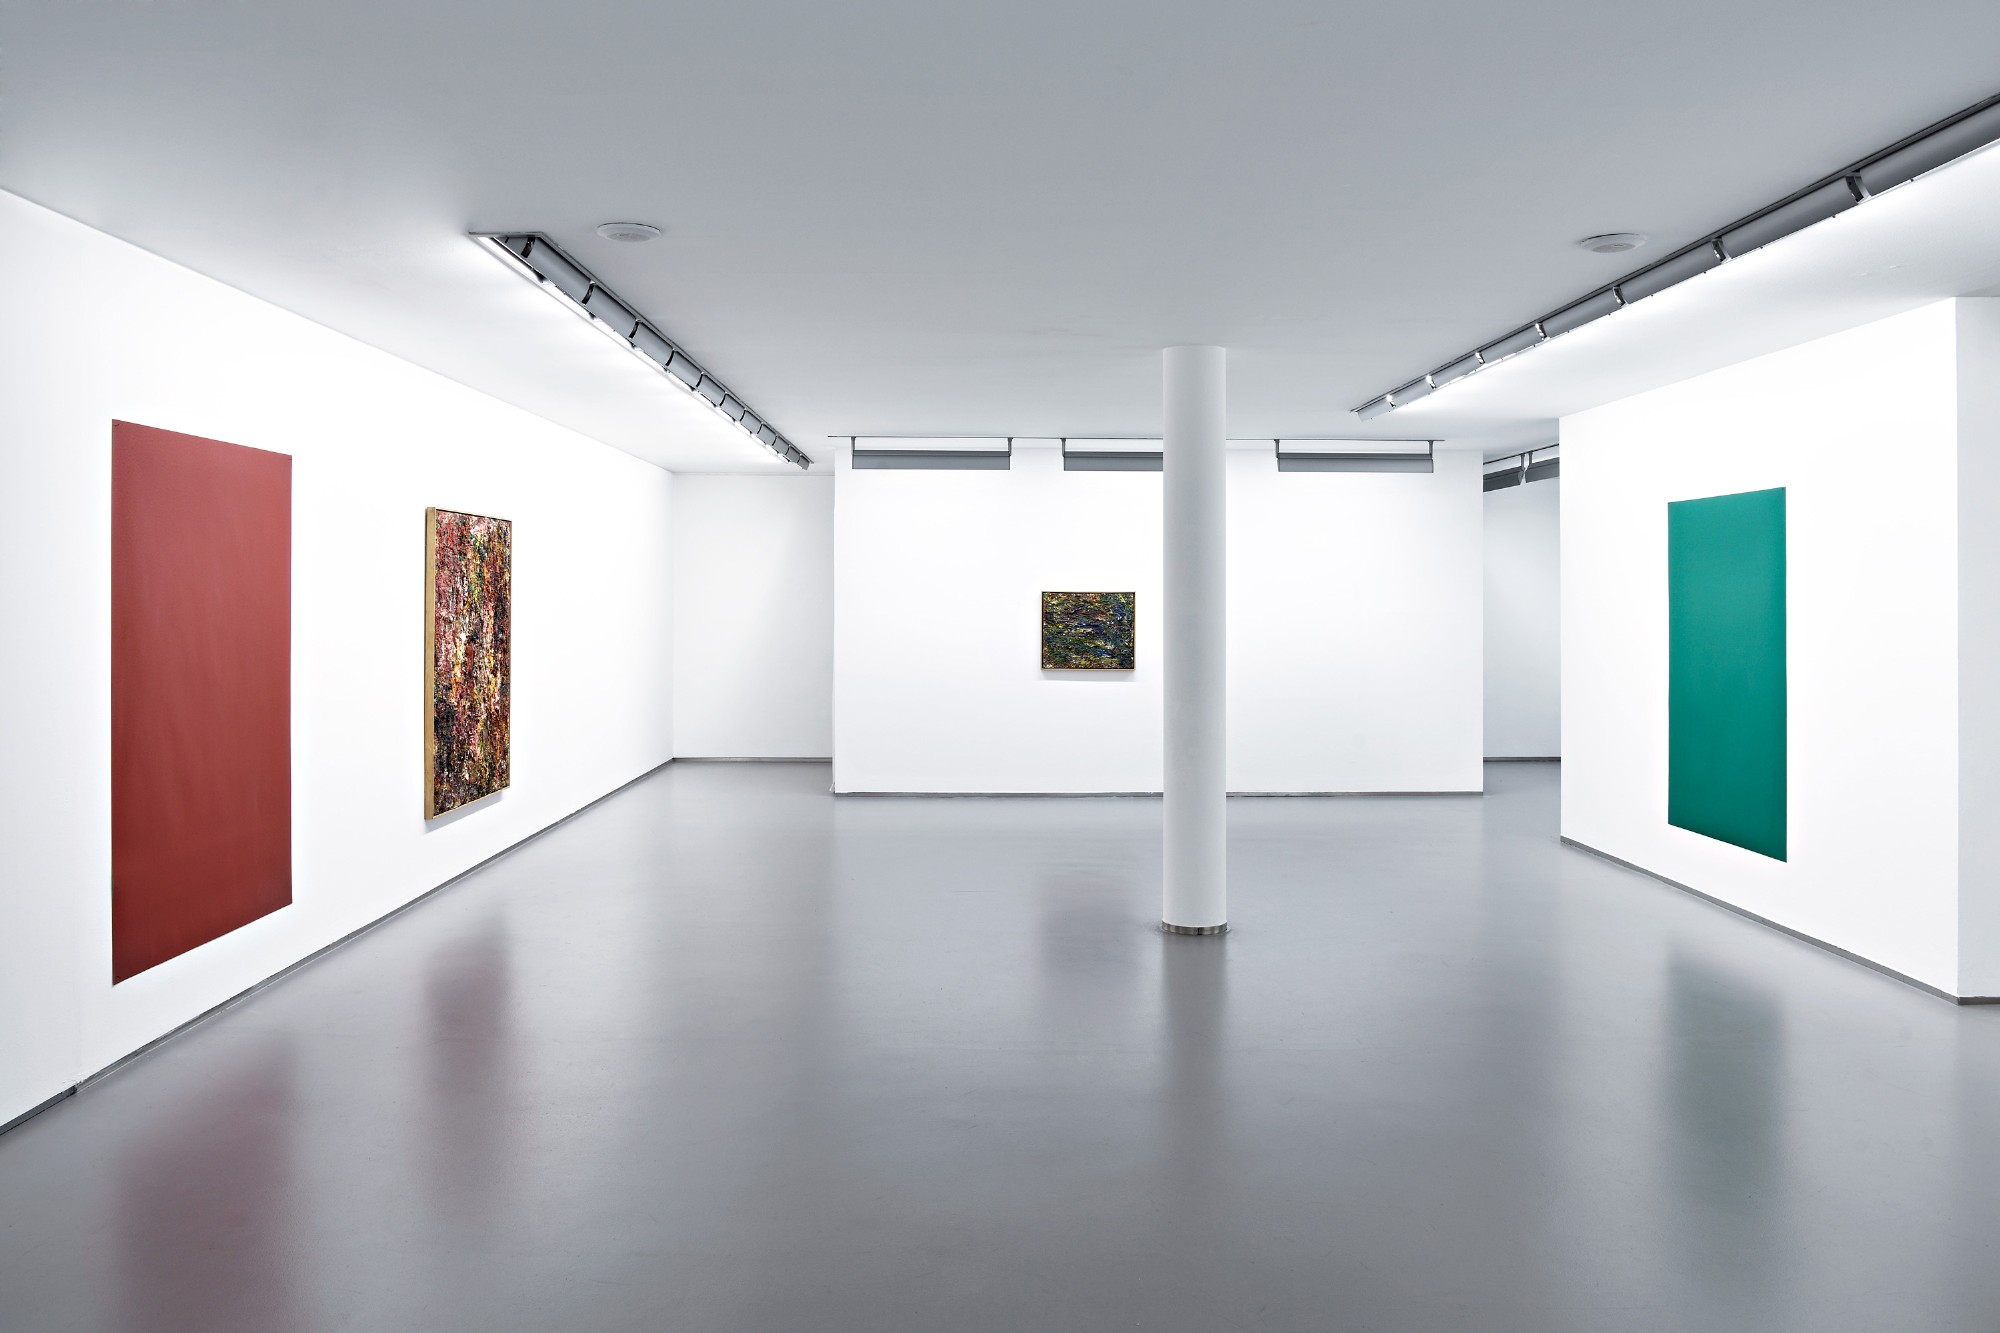 Le monde pictorial - Eugène Leroy, Tobias Hantmann, Exhibition view, 2017